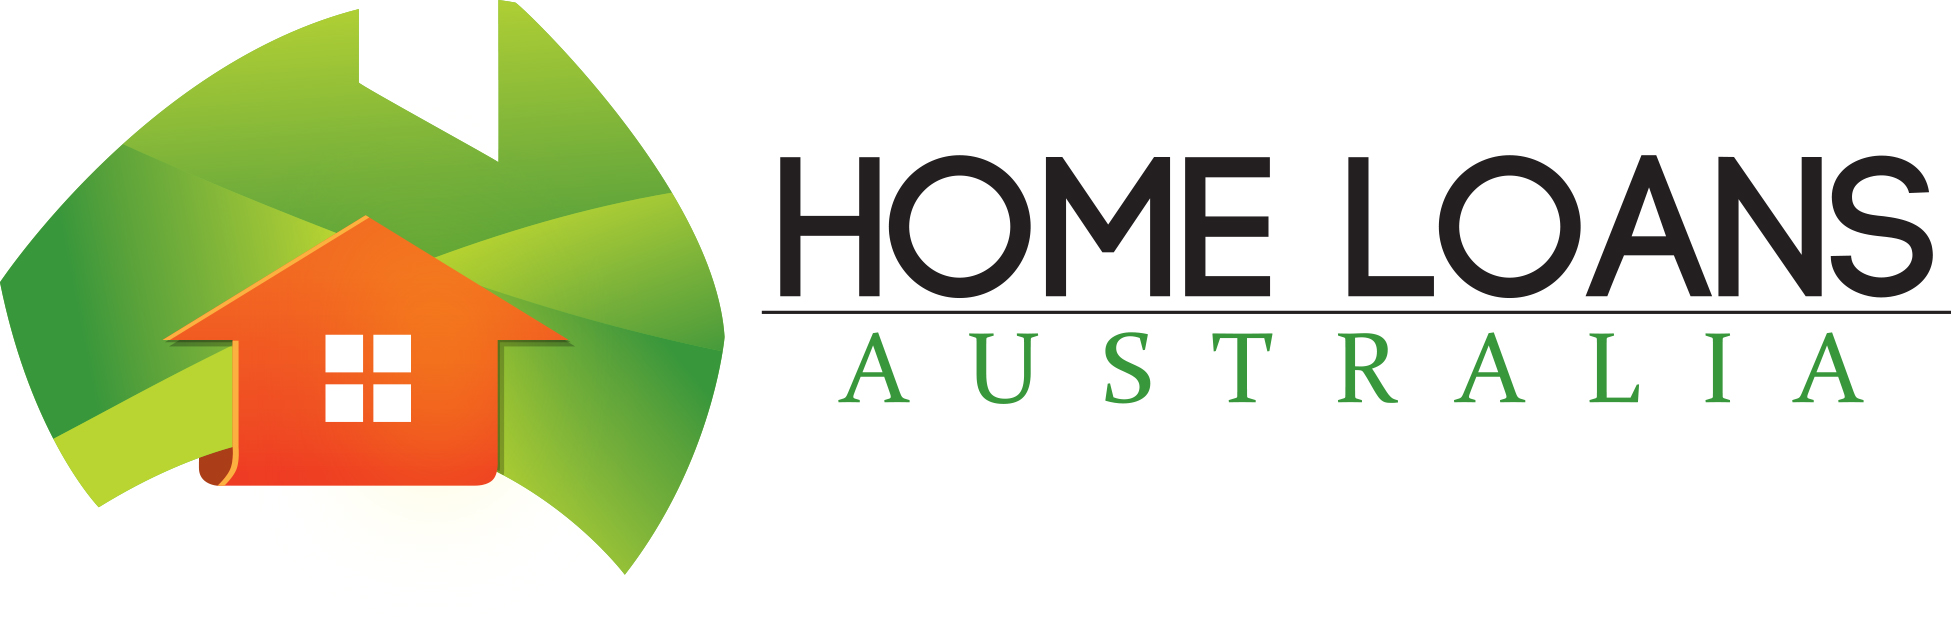 Home Loans Australia